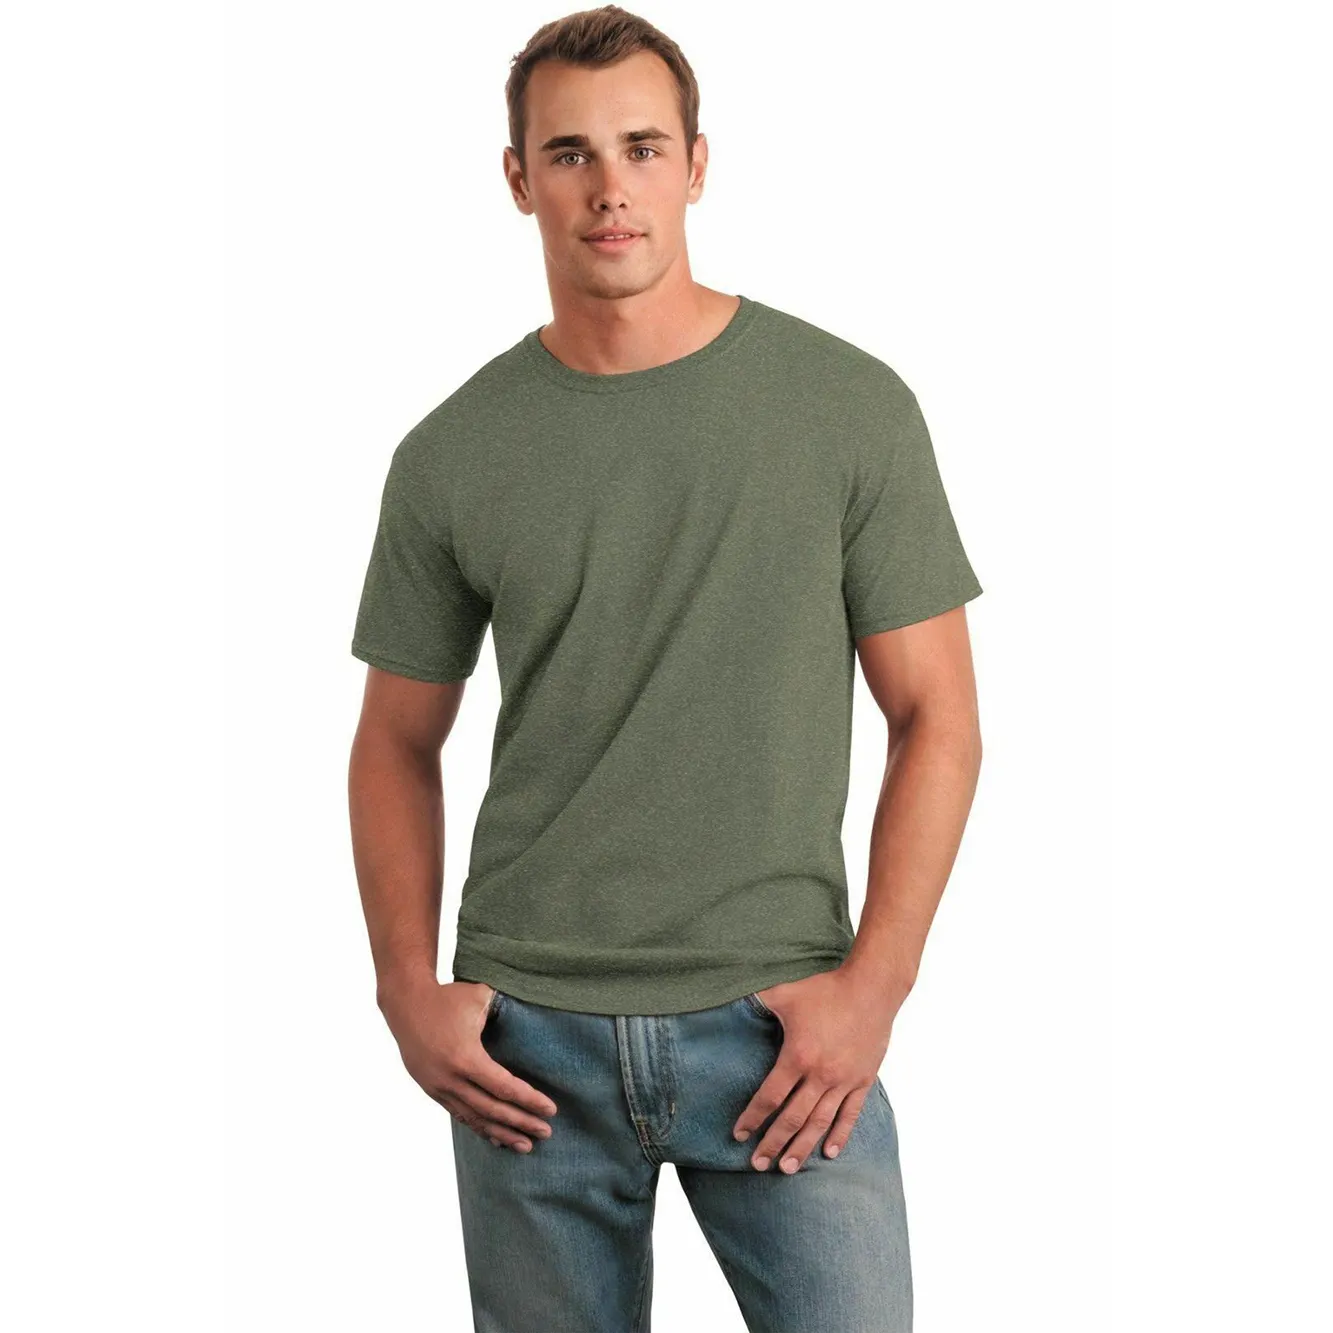 Kaus 300G Longgar Desain Baru Grosir Kaus Katun Berat 100% Katun untuk Pria Logo Anda Sesuai Pesanan